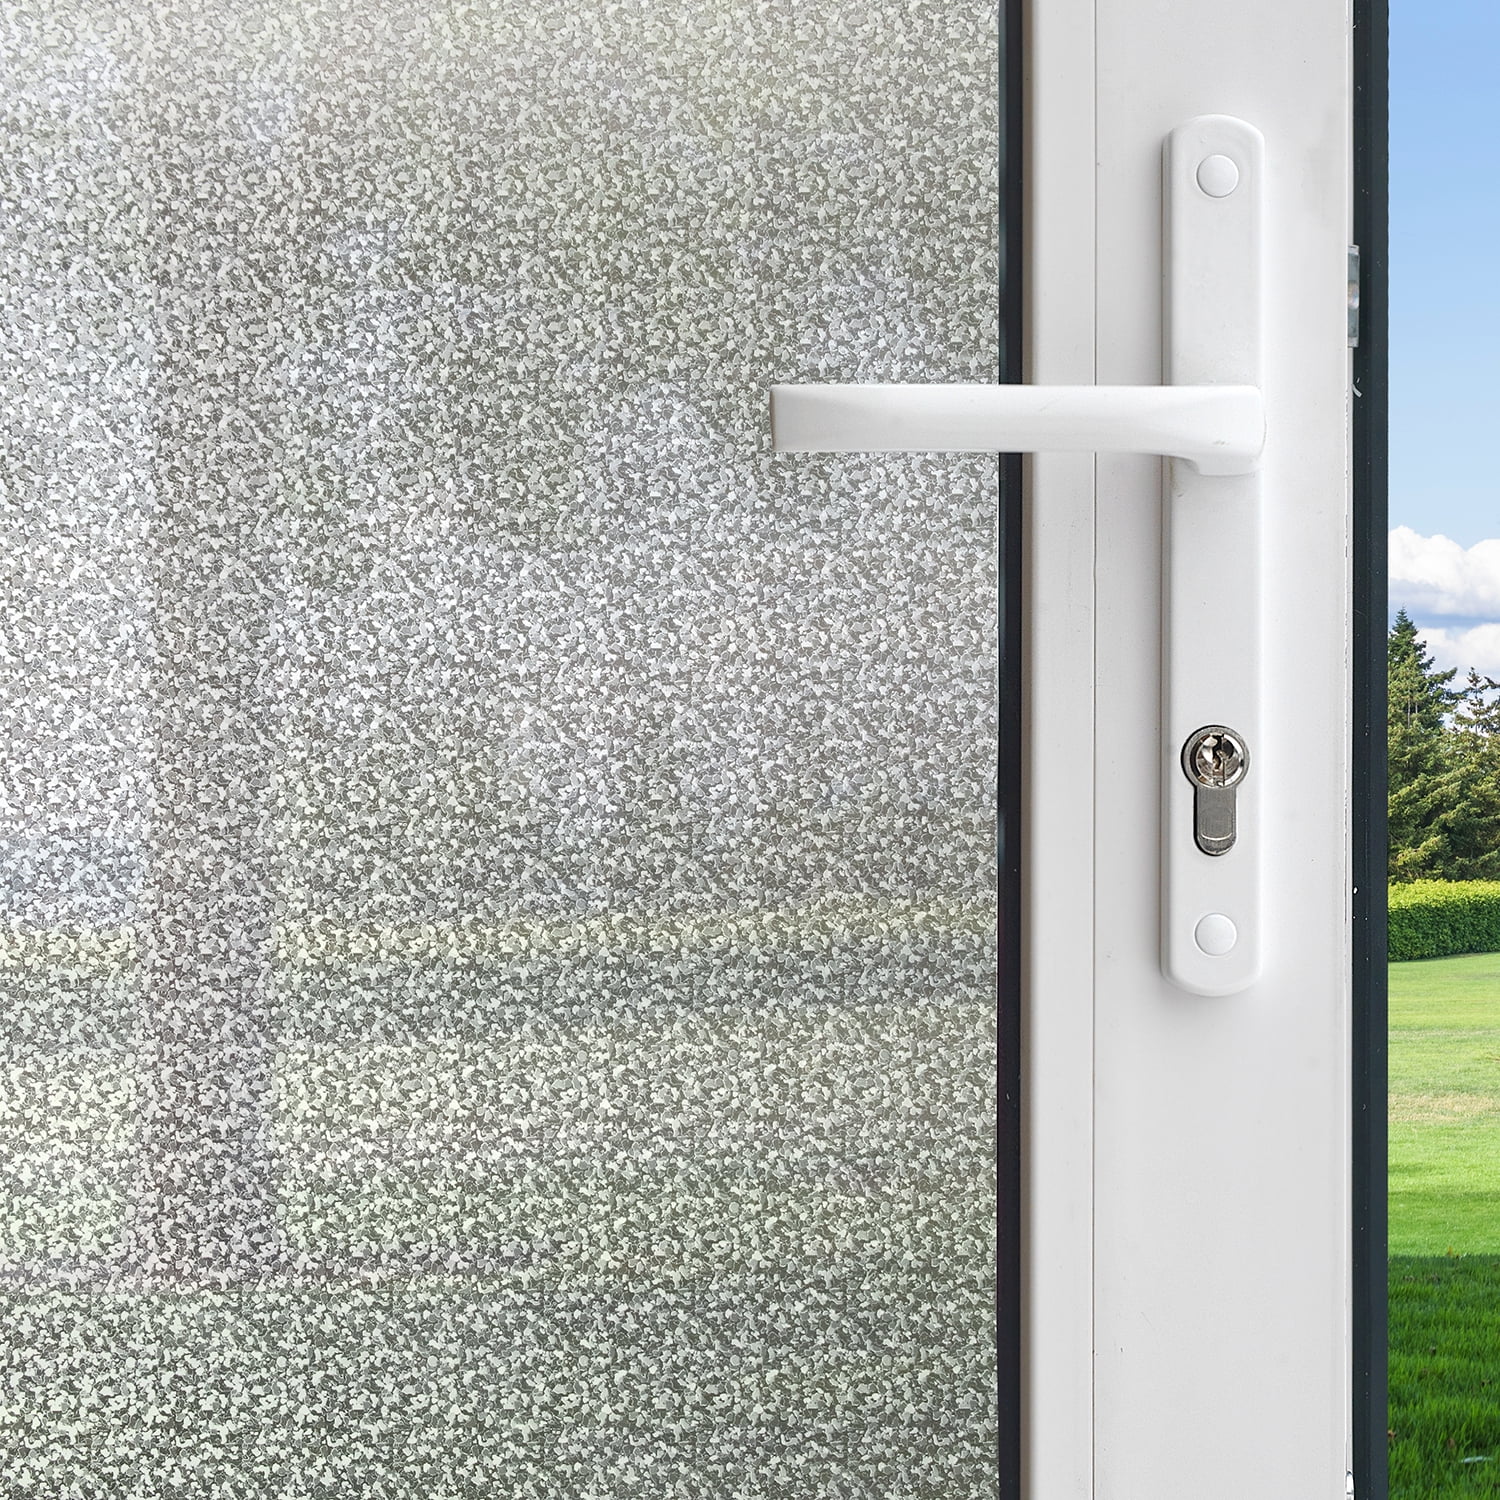 Gila Heat Control Light Gray Adhesive Residential DIY Window Film Sun Blocking x 